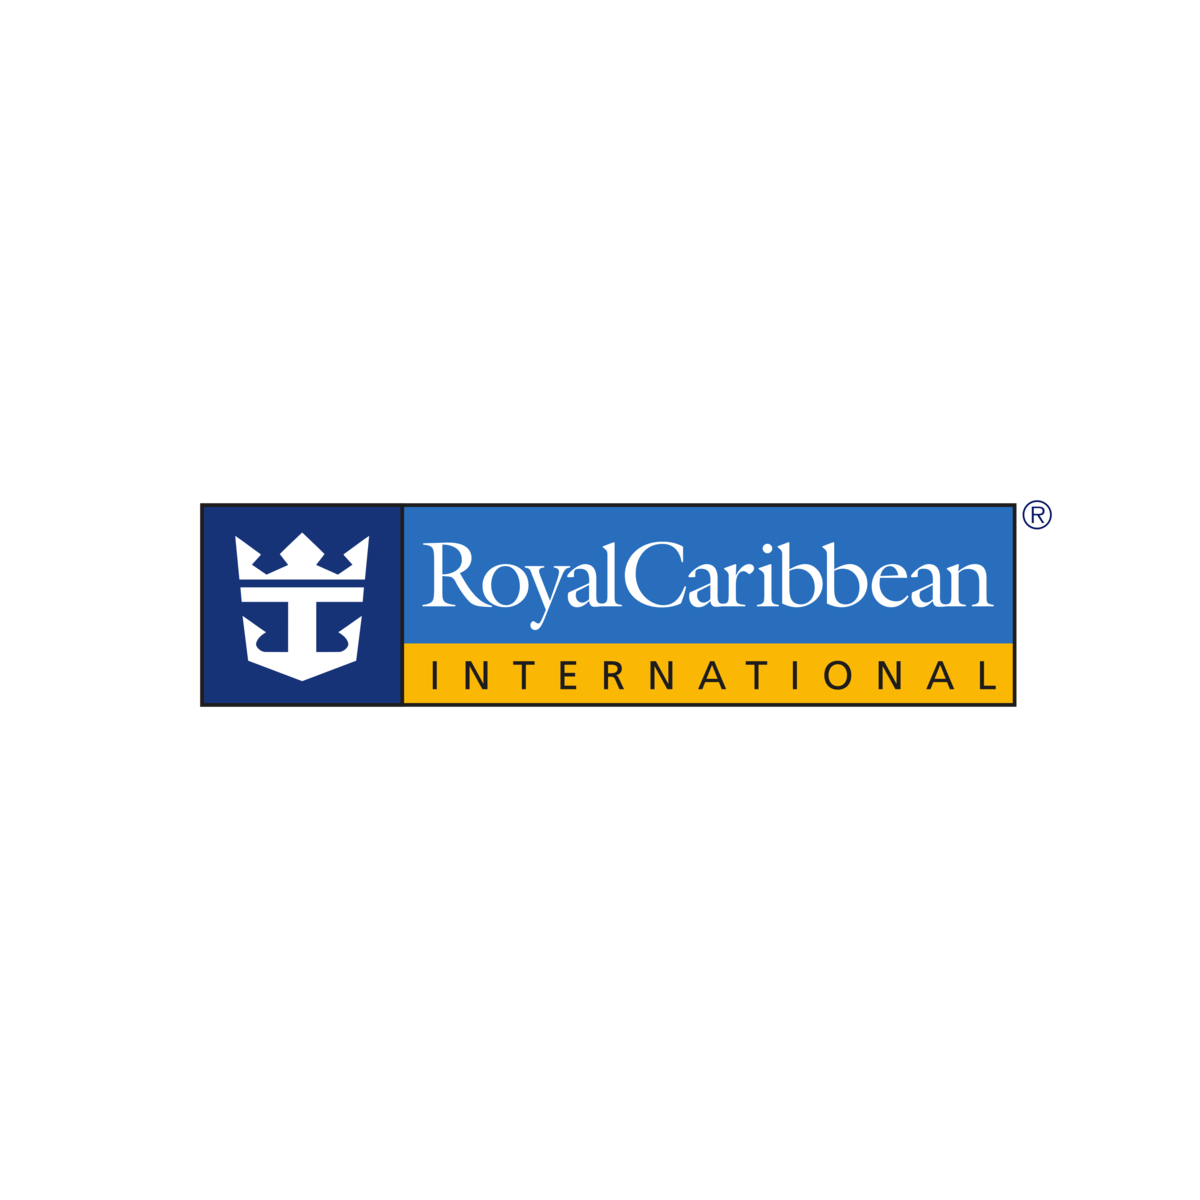 royal caribbean cruises logo